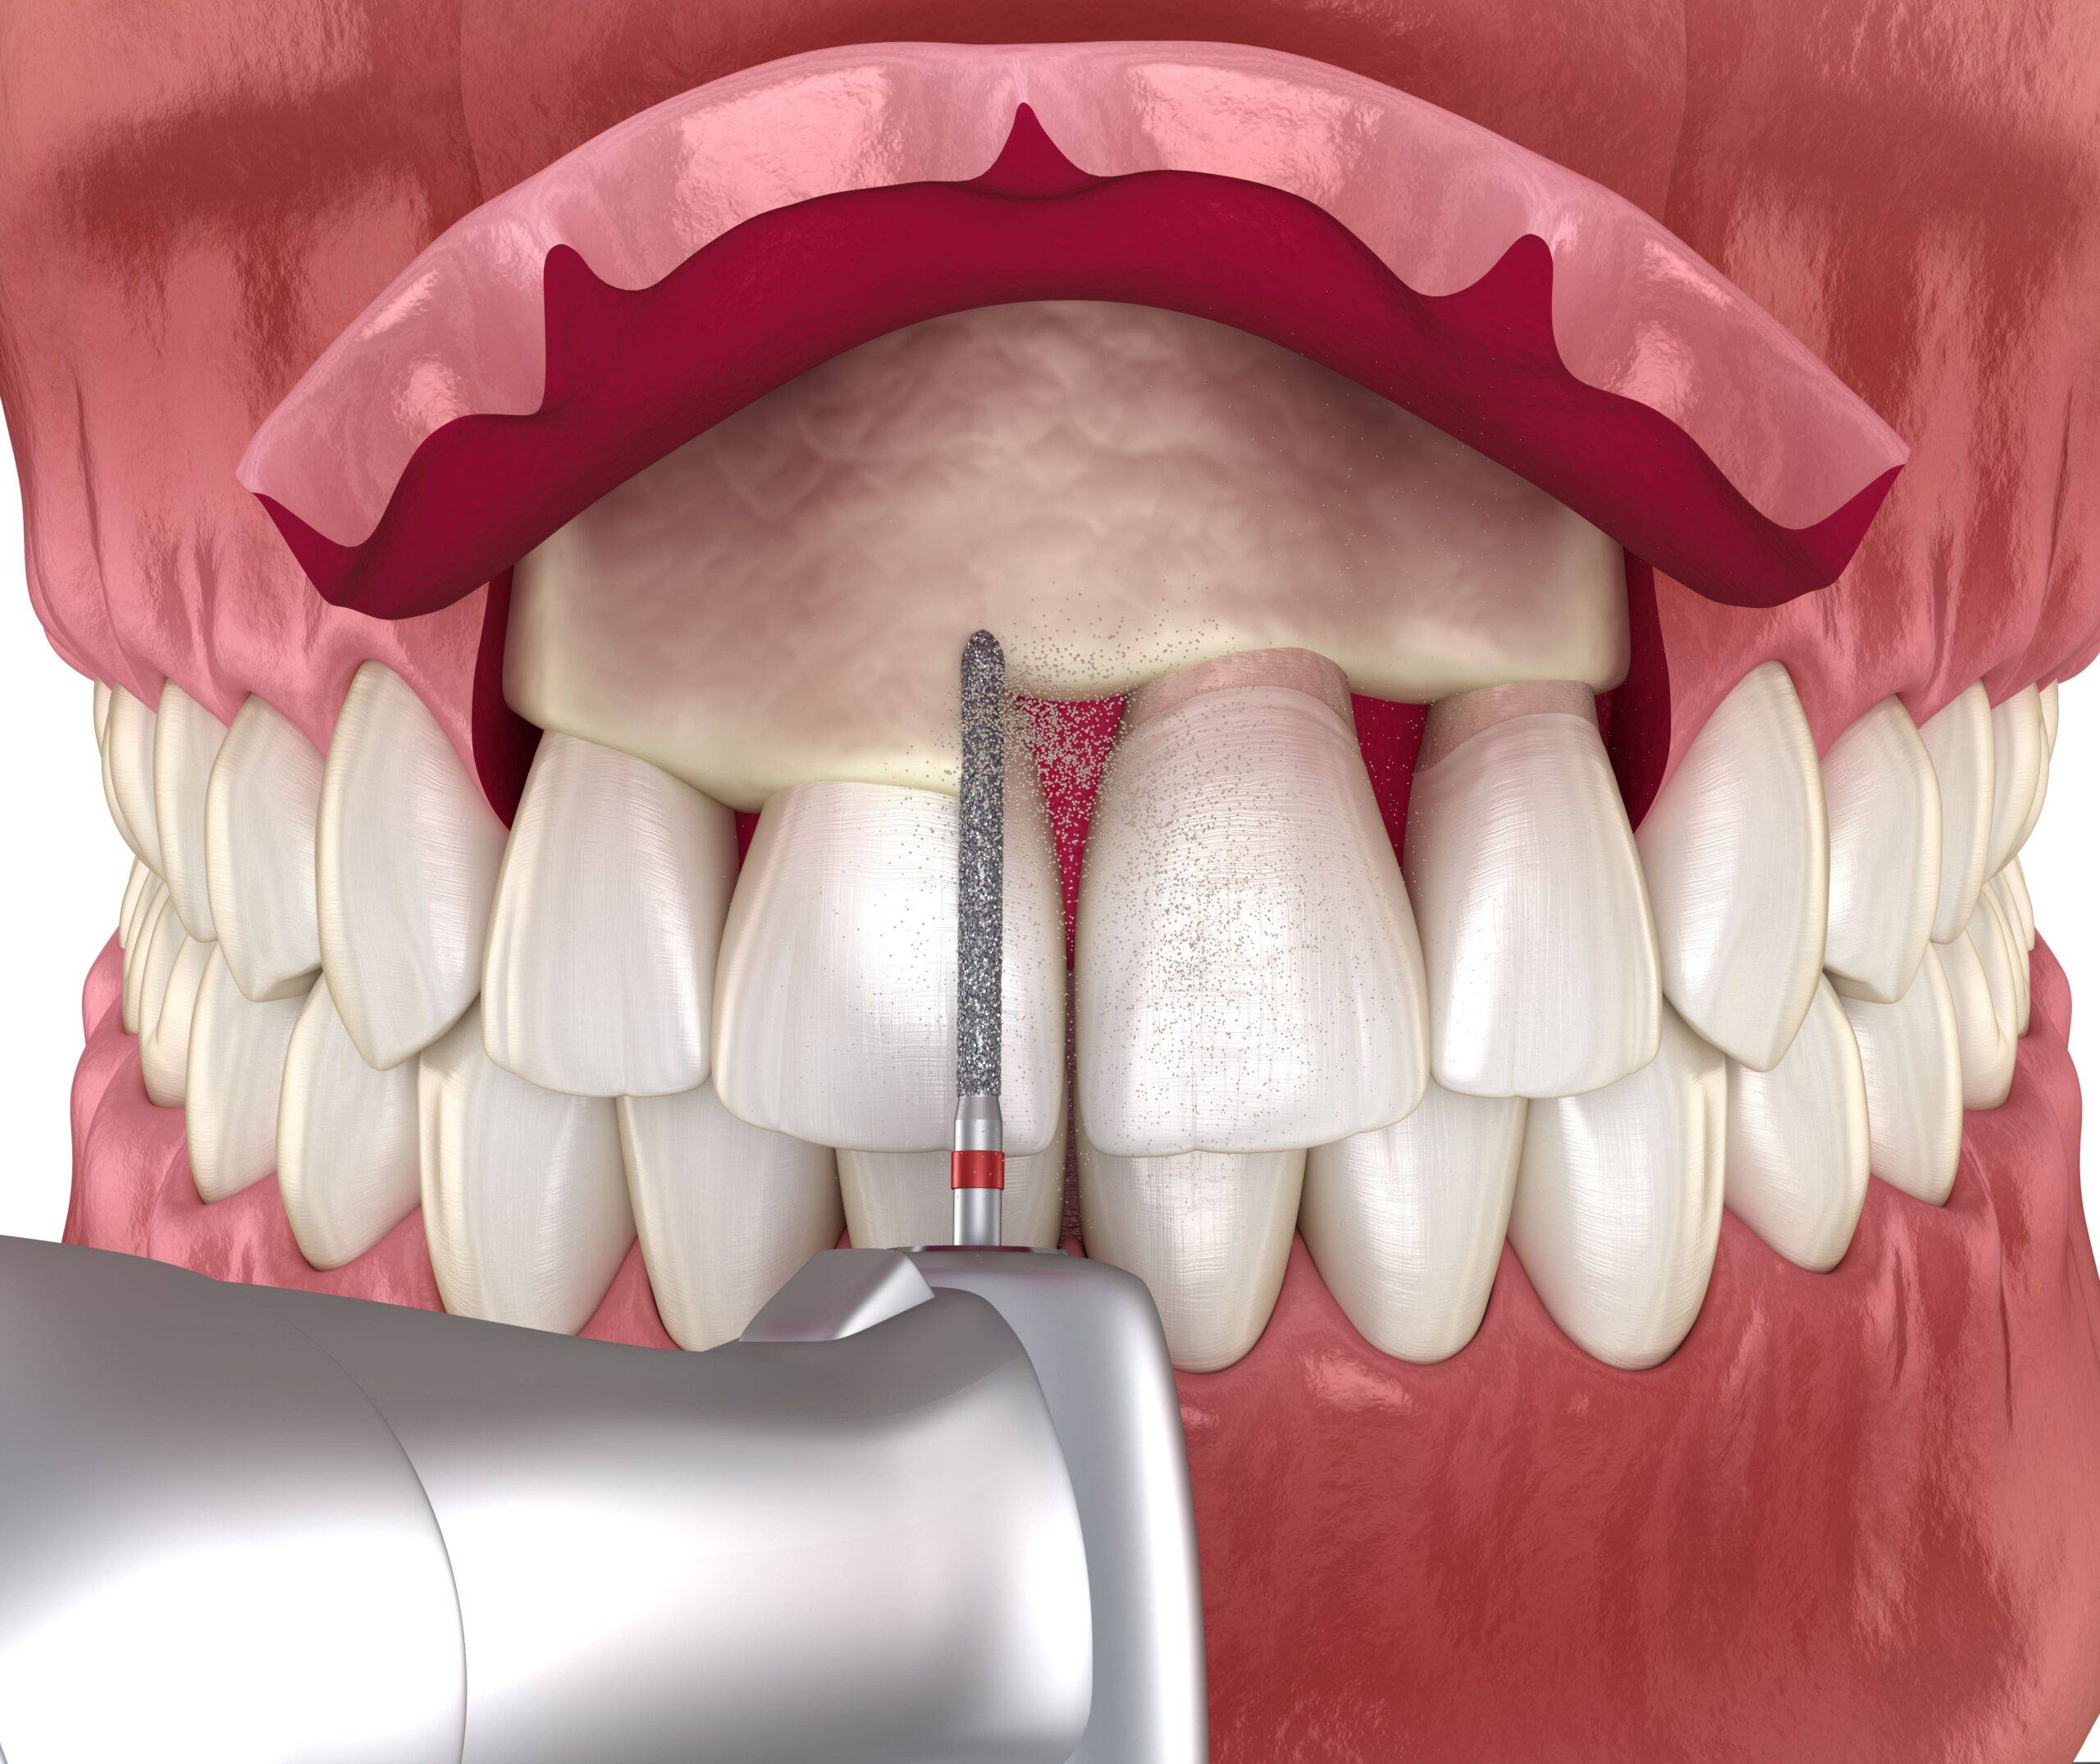 Periodontal Plastic Surgery at Inima Dental Marbella